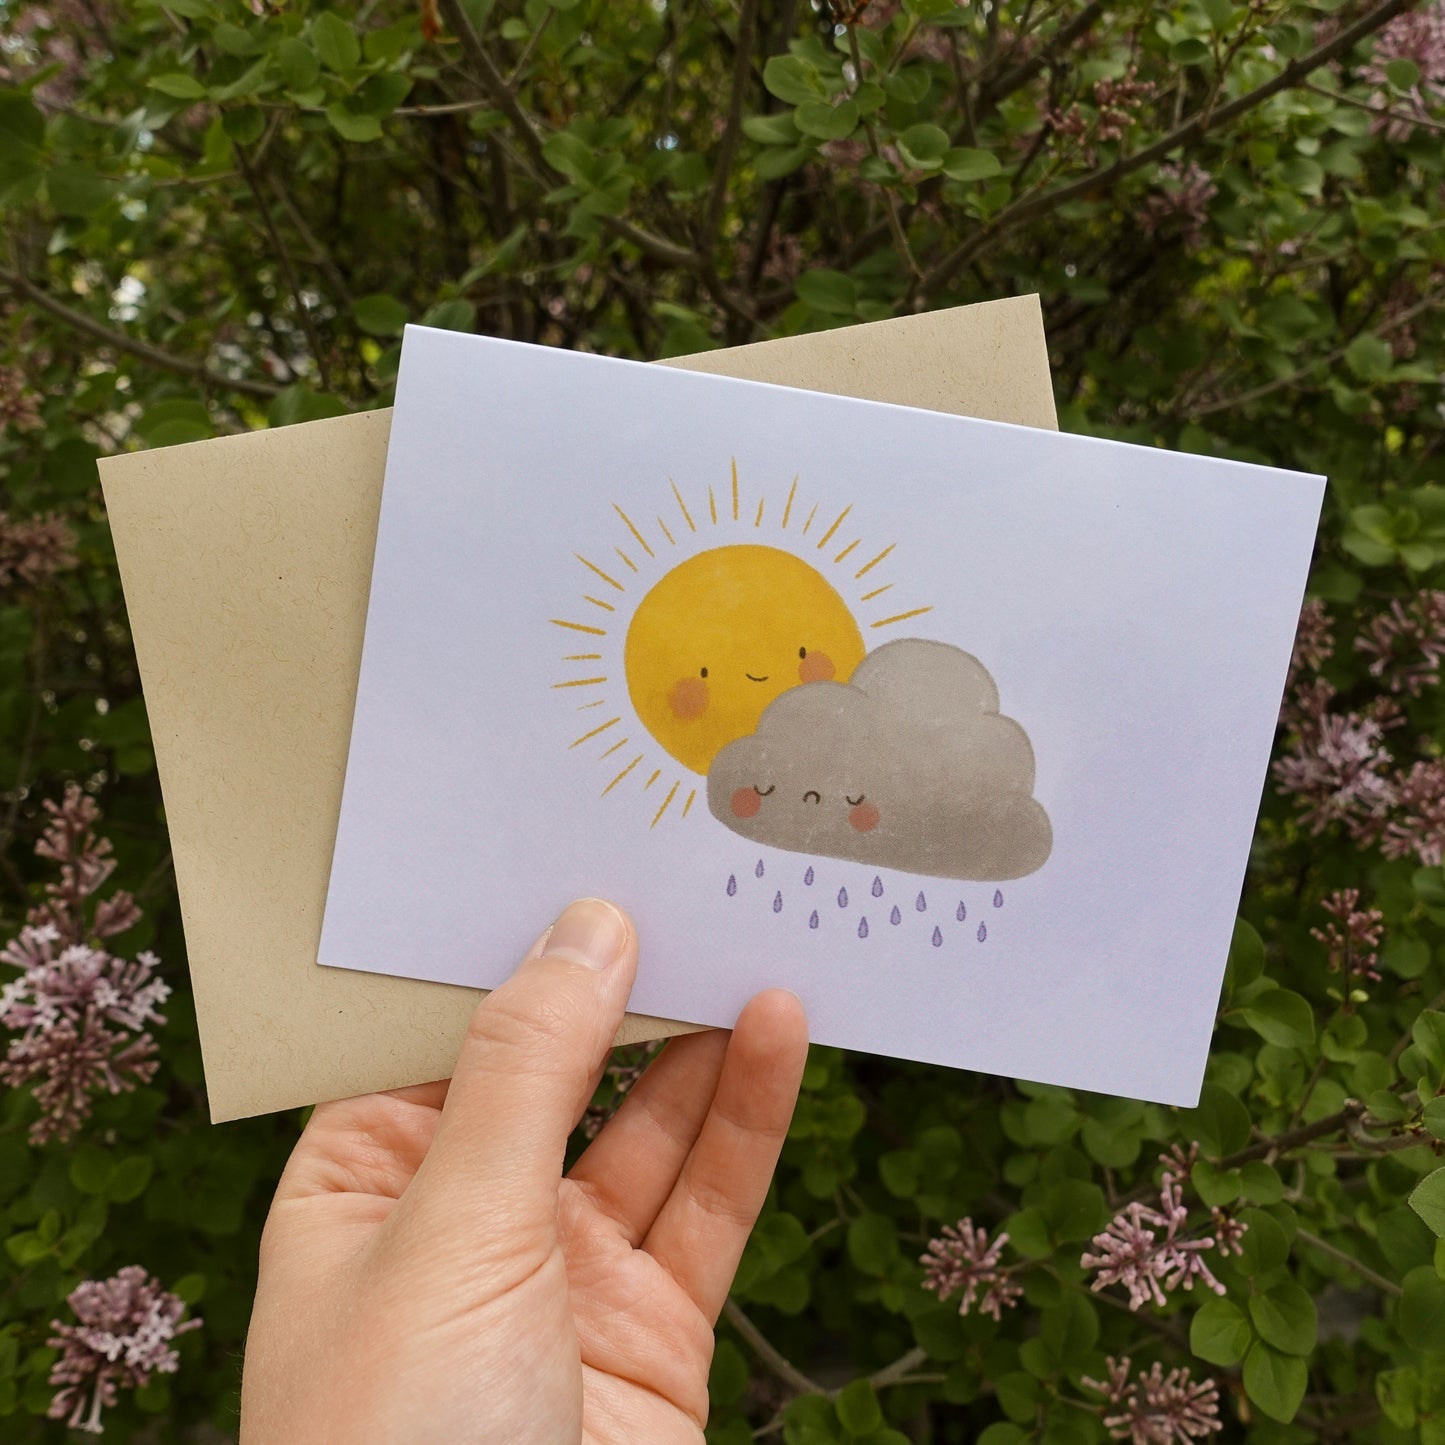 It's Okay to Have Rainy Days - Sympathy, Condolence, Encouragement Card